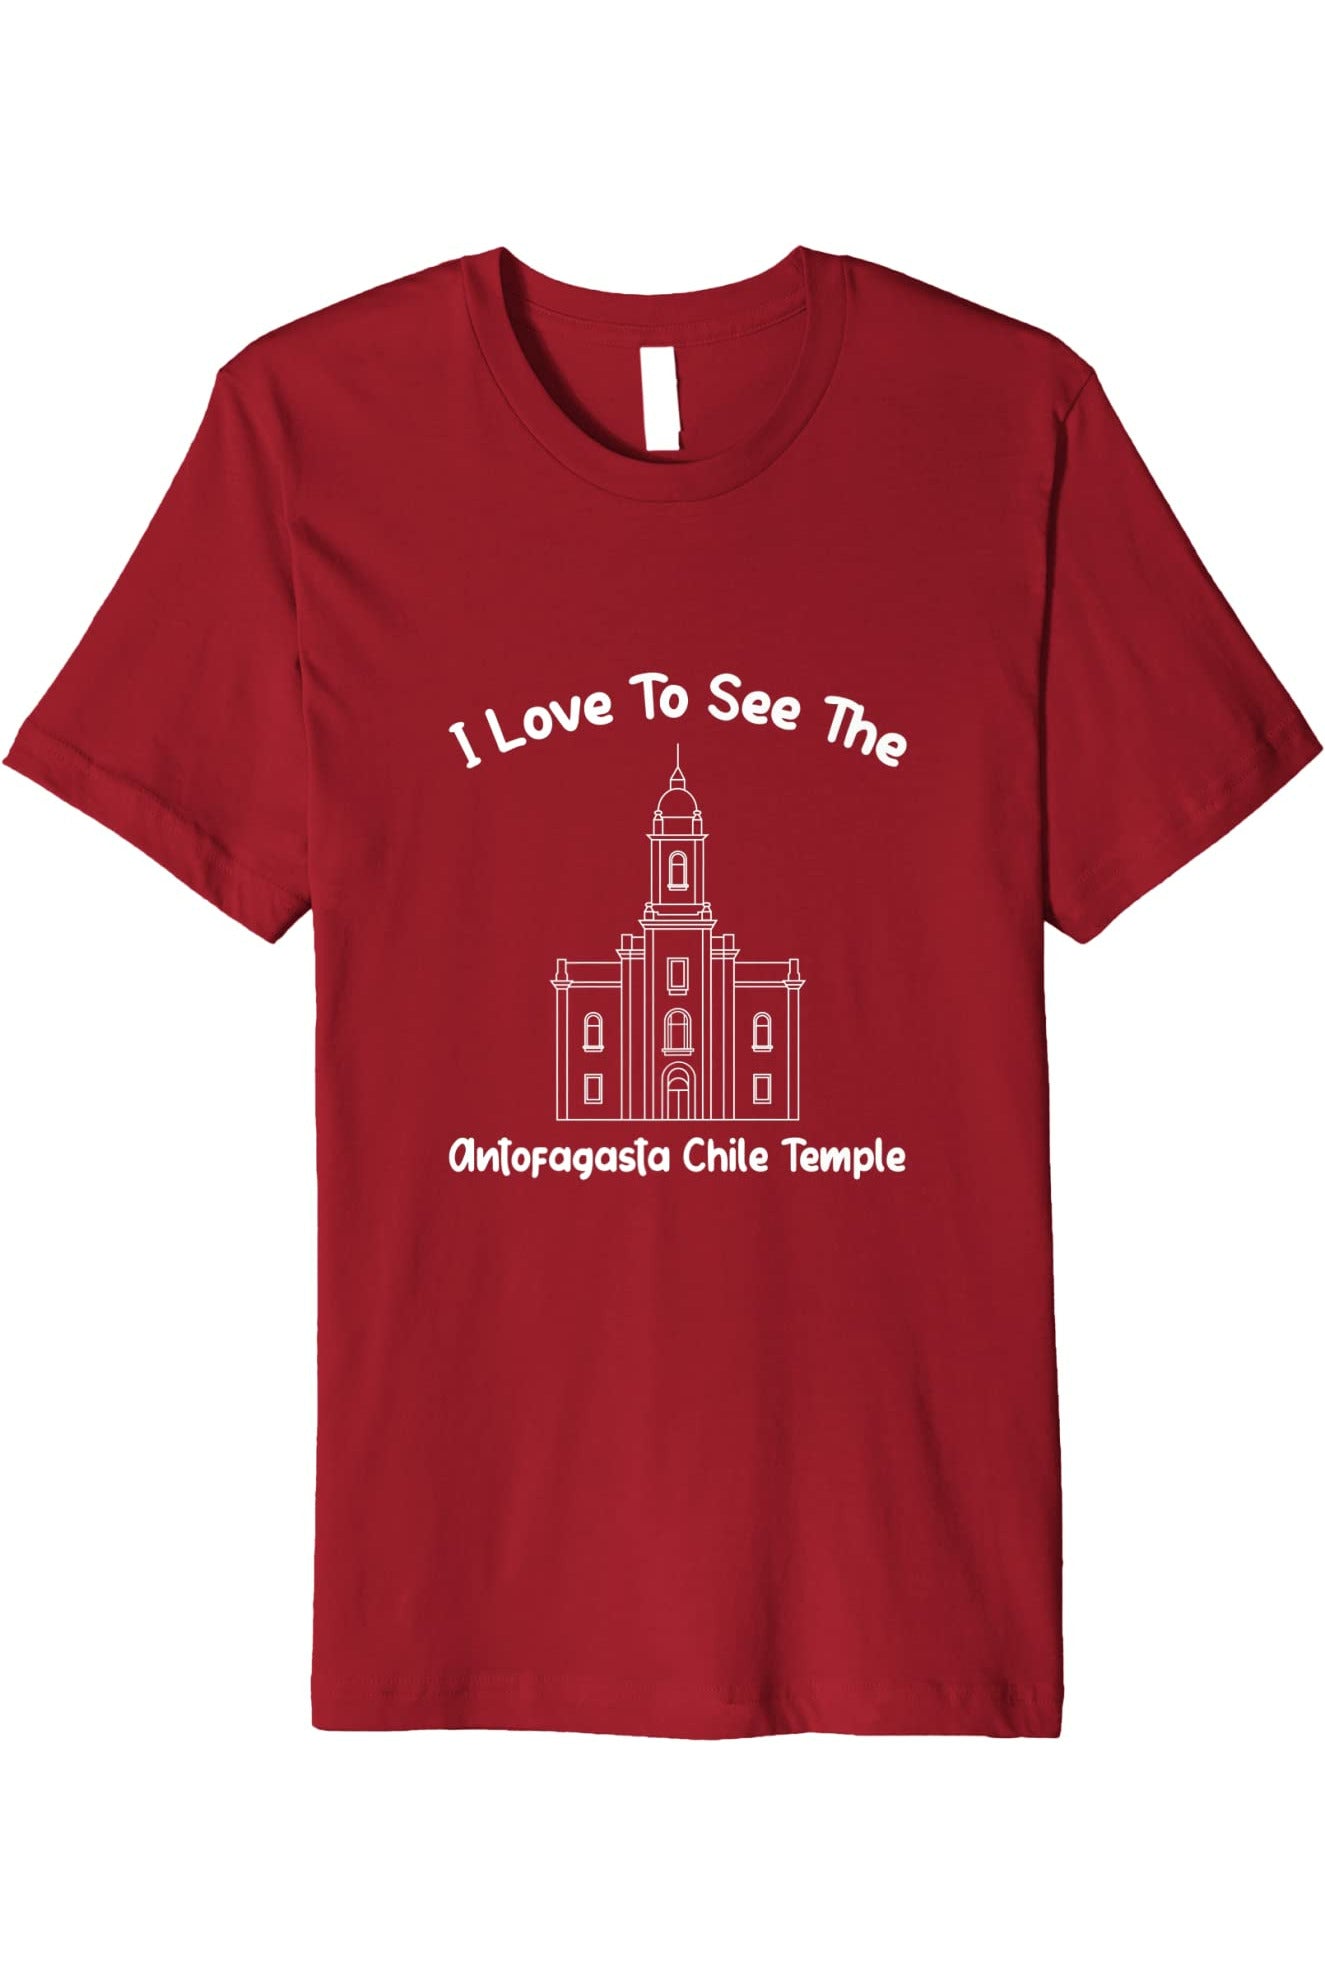 Antofagasta Chile Temple T-Shirt - Premium - Primary Style (English) US